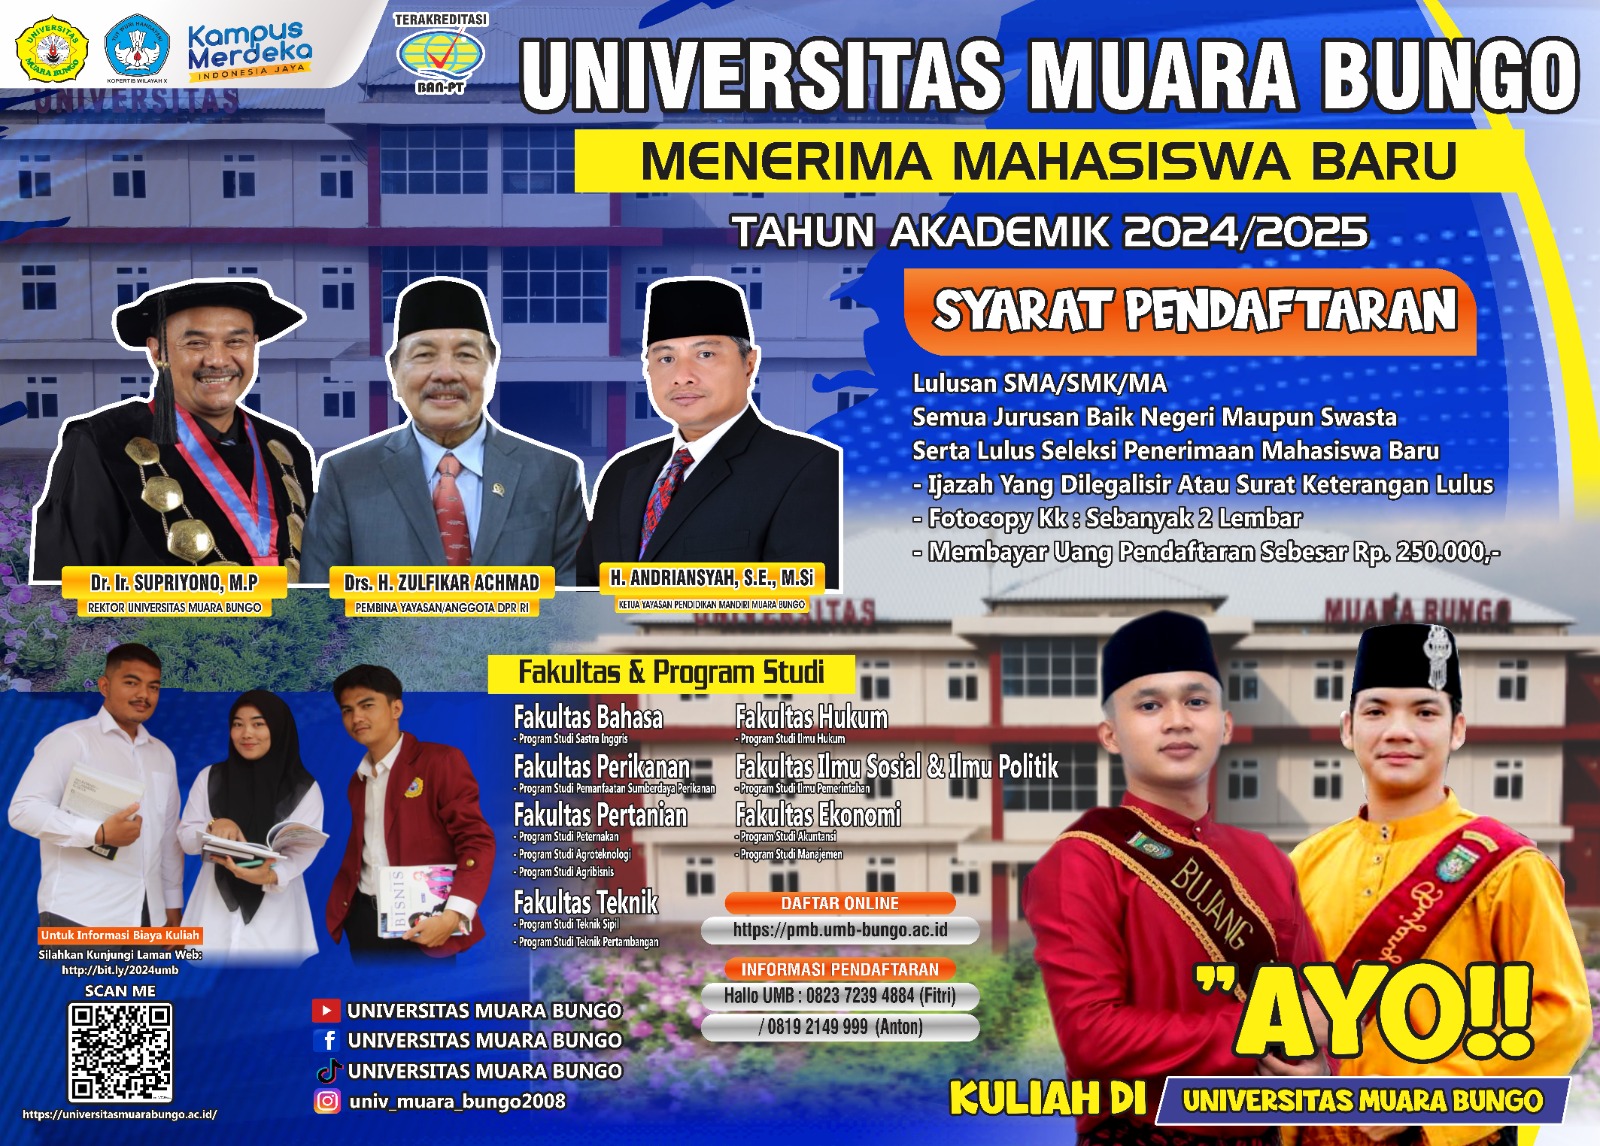 Universitas Muara Bungo Menerima Mahasiswa Baru Tahun Akademik 2024/2025